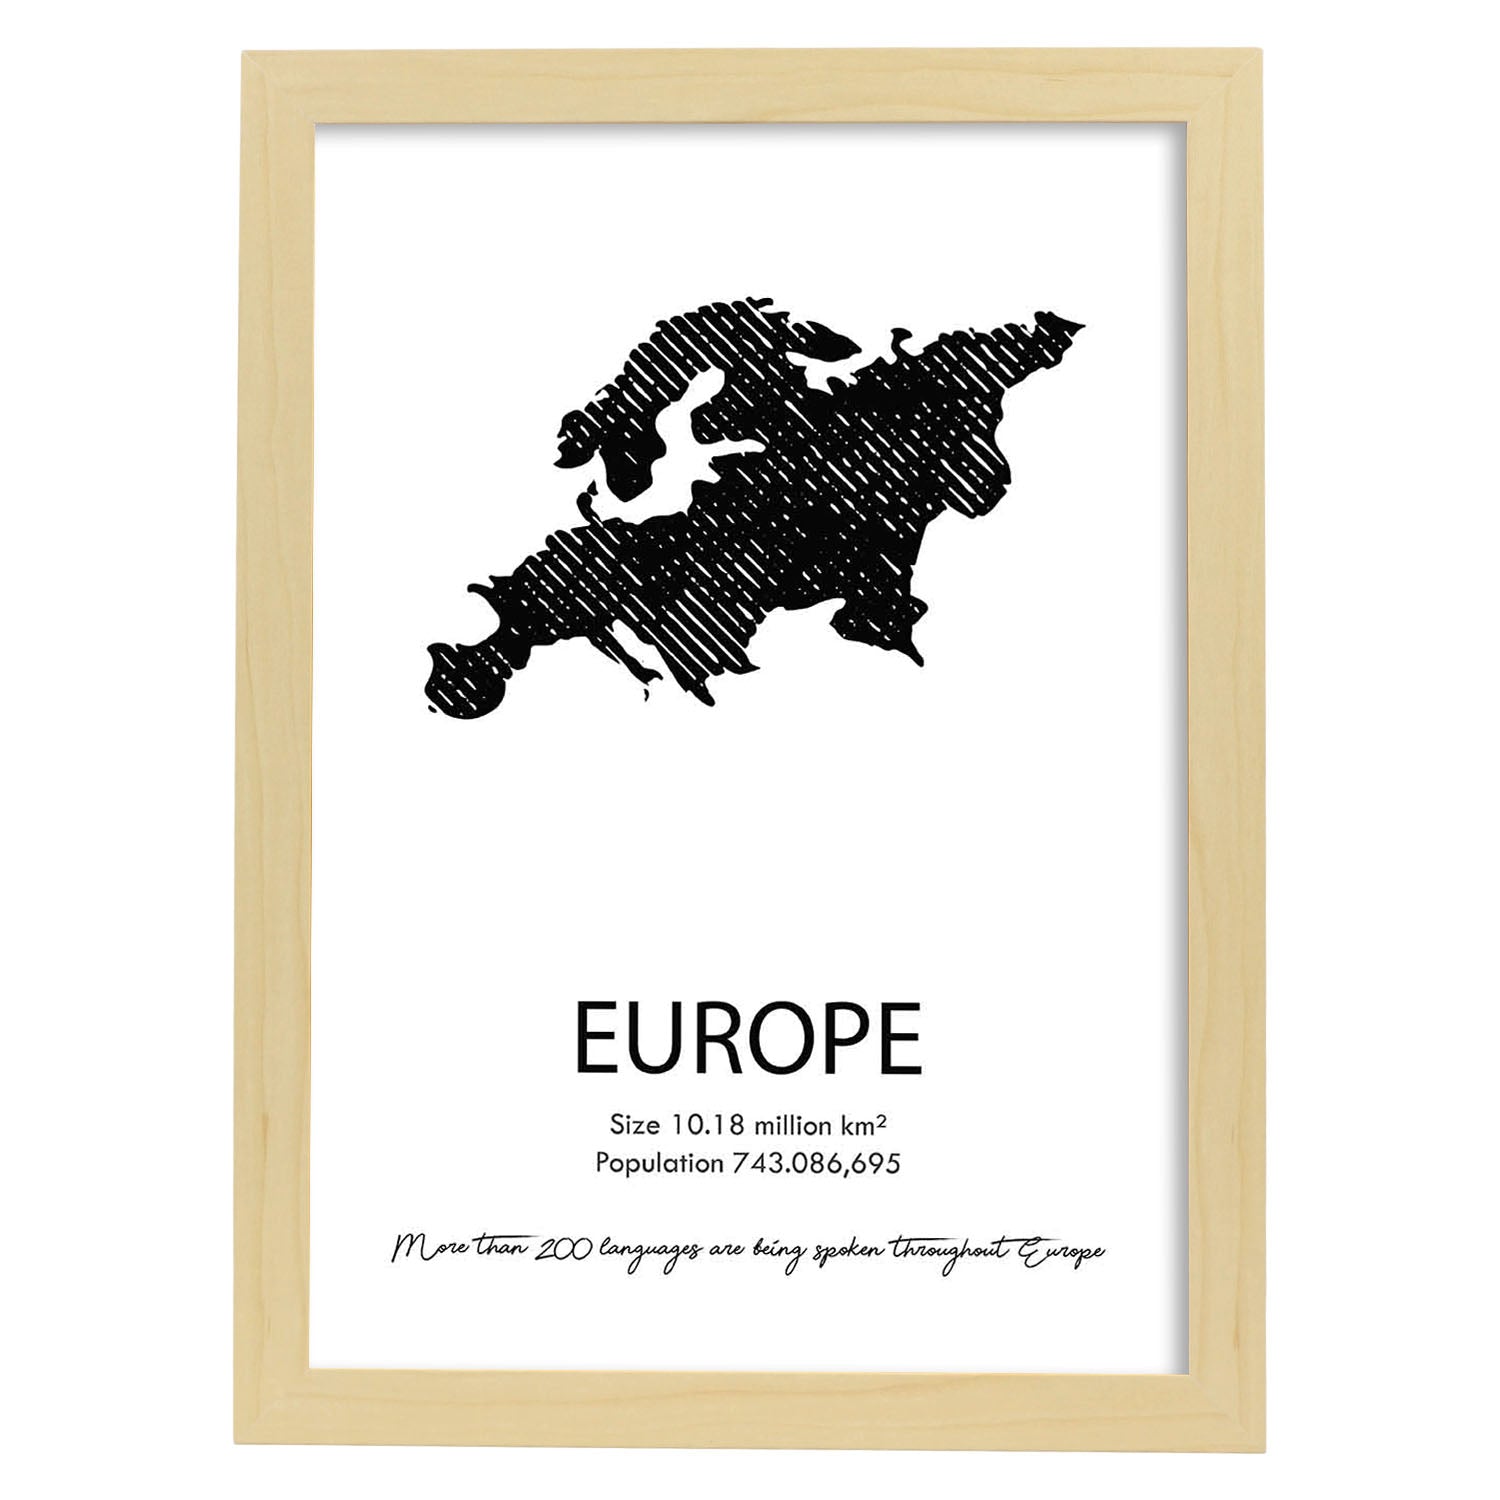 Poster de Europe. Láminas de paises y continentes del mundo.-Artwork-Nacnic-A4-Marco Madera clara-Nacnic Estudio SL